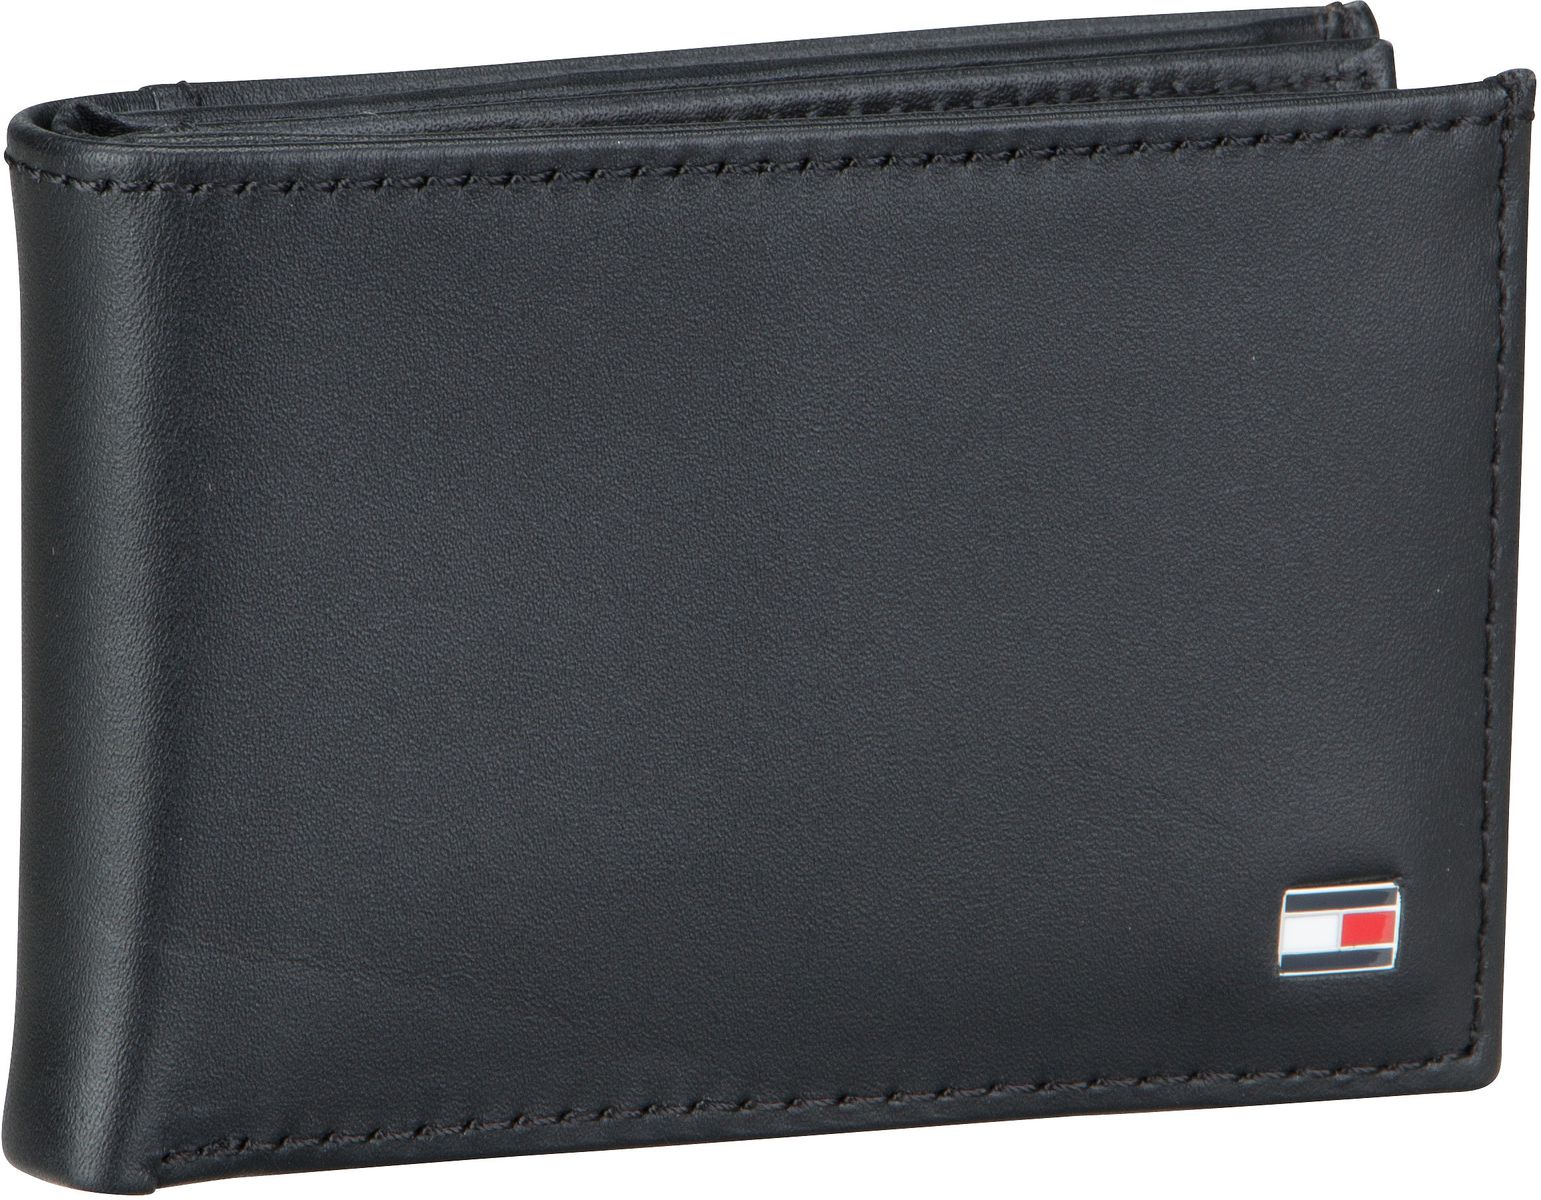 Eton Mini CC Flap & Coin Pocket